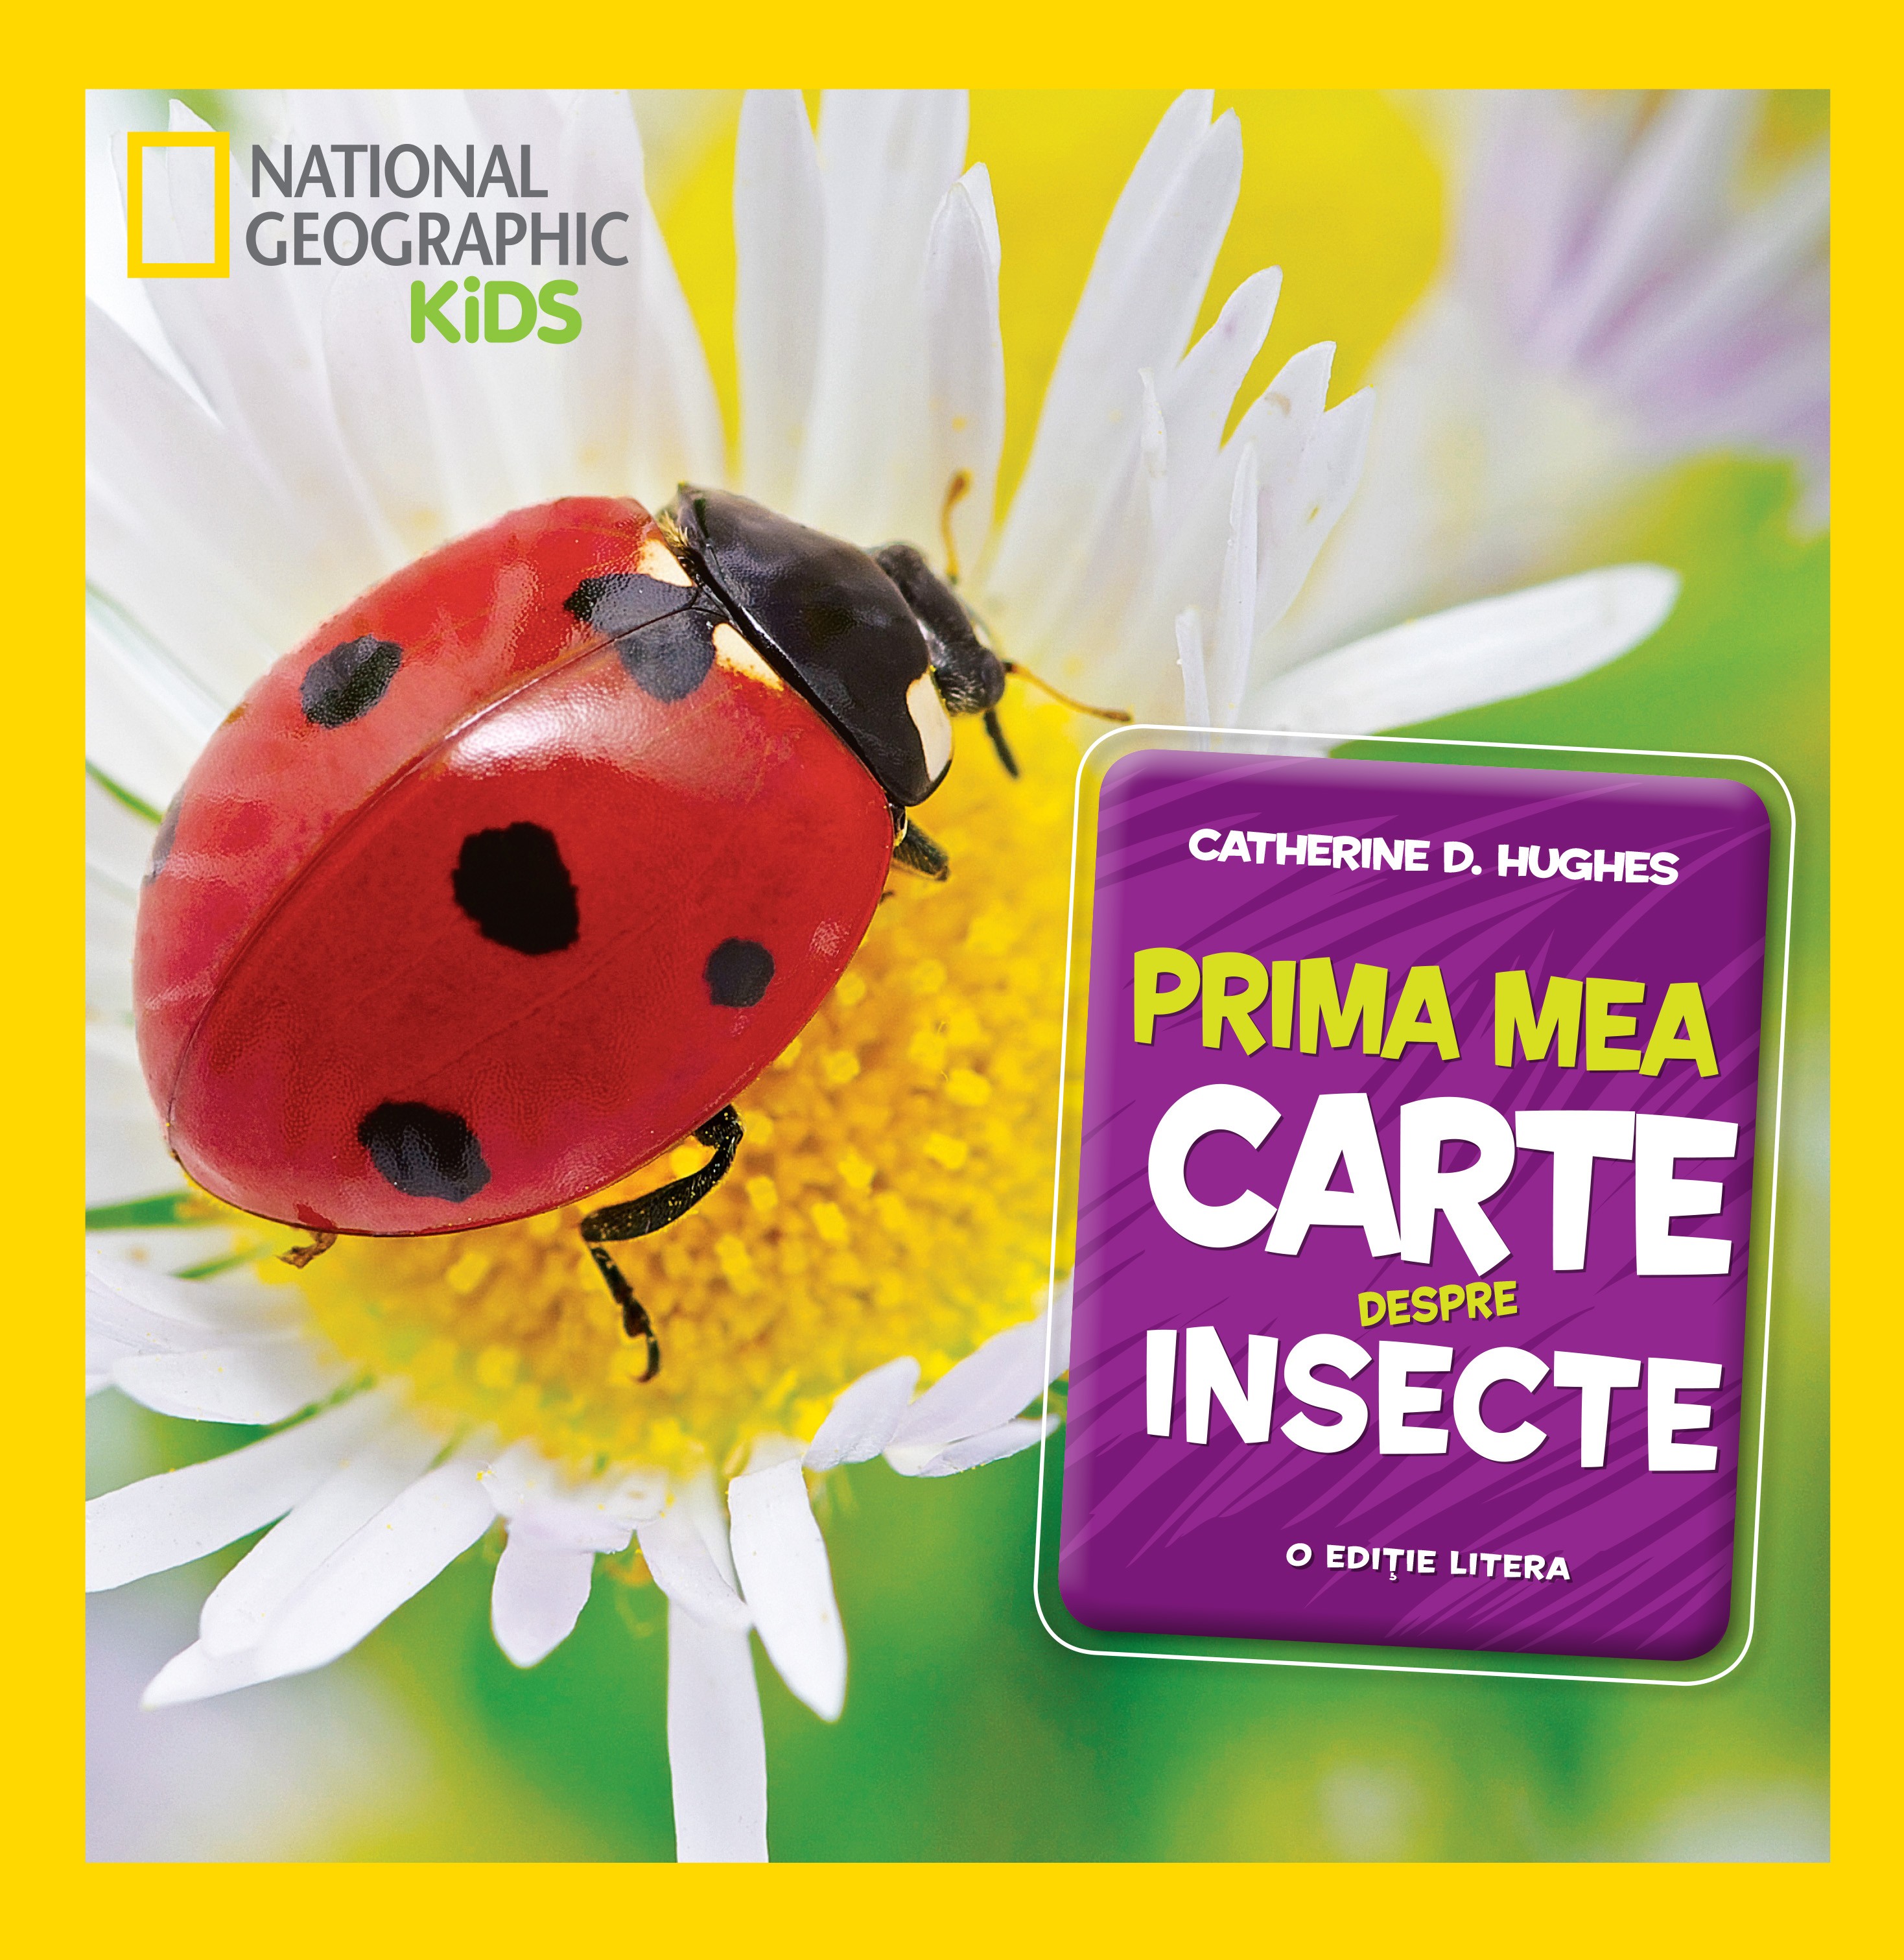 Prima mea carte despre insecte - Catherine D. Hughes - National Geographic Kids